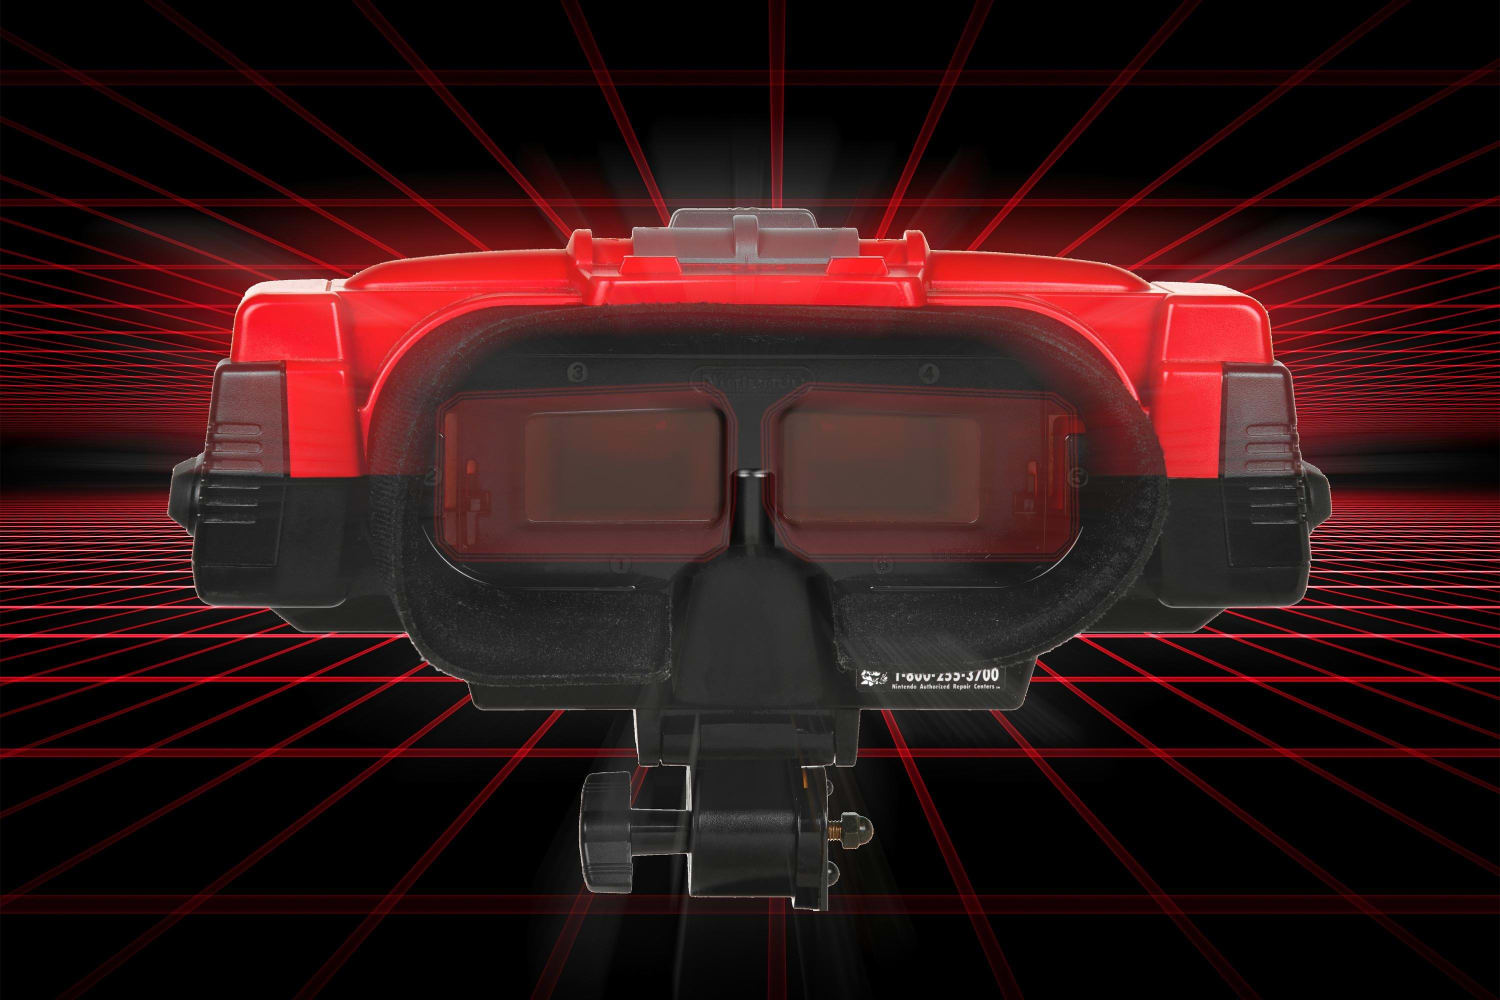 The fallen of virtual reality